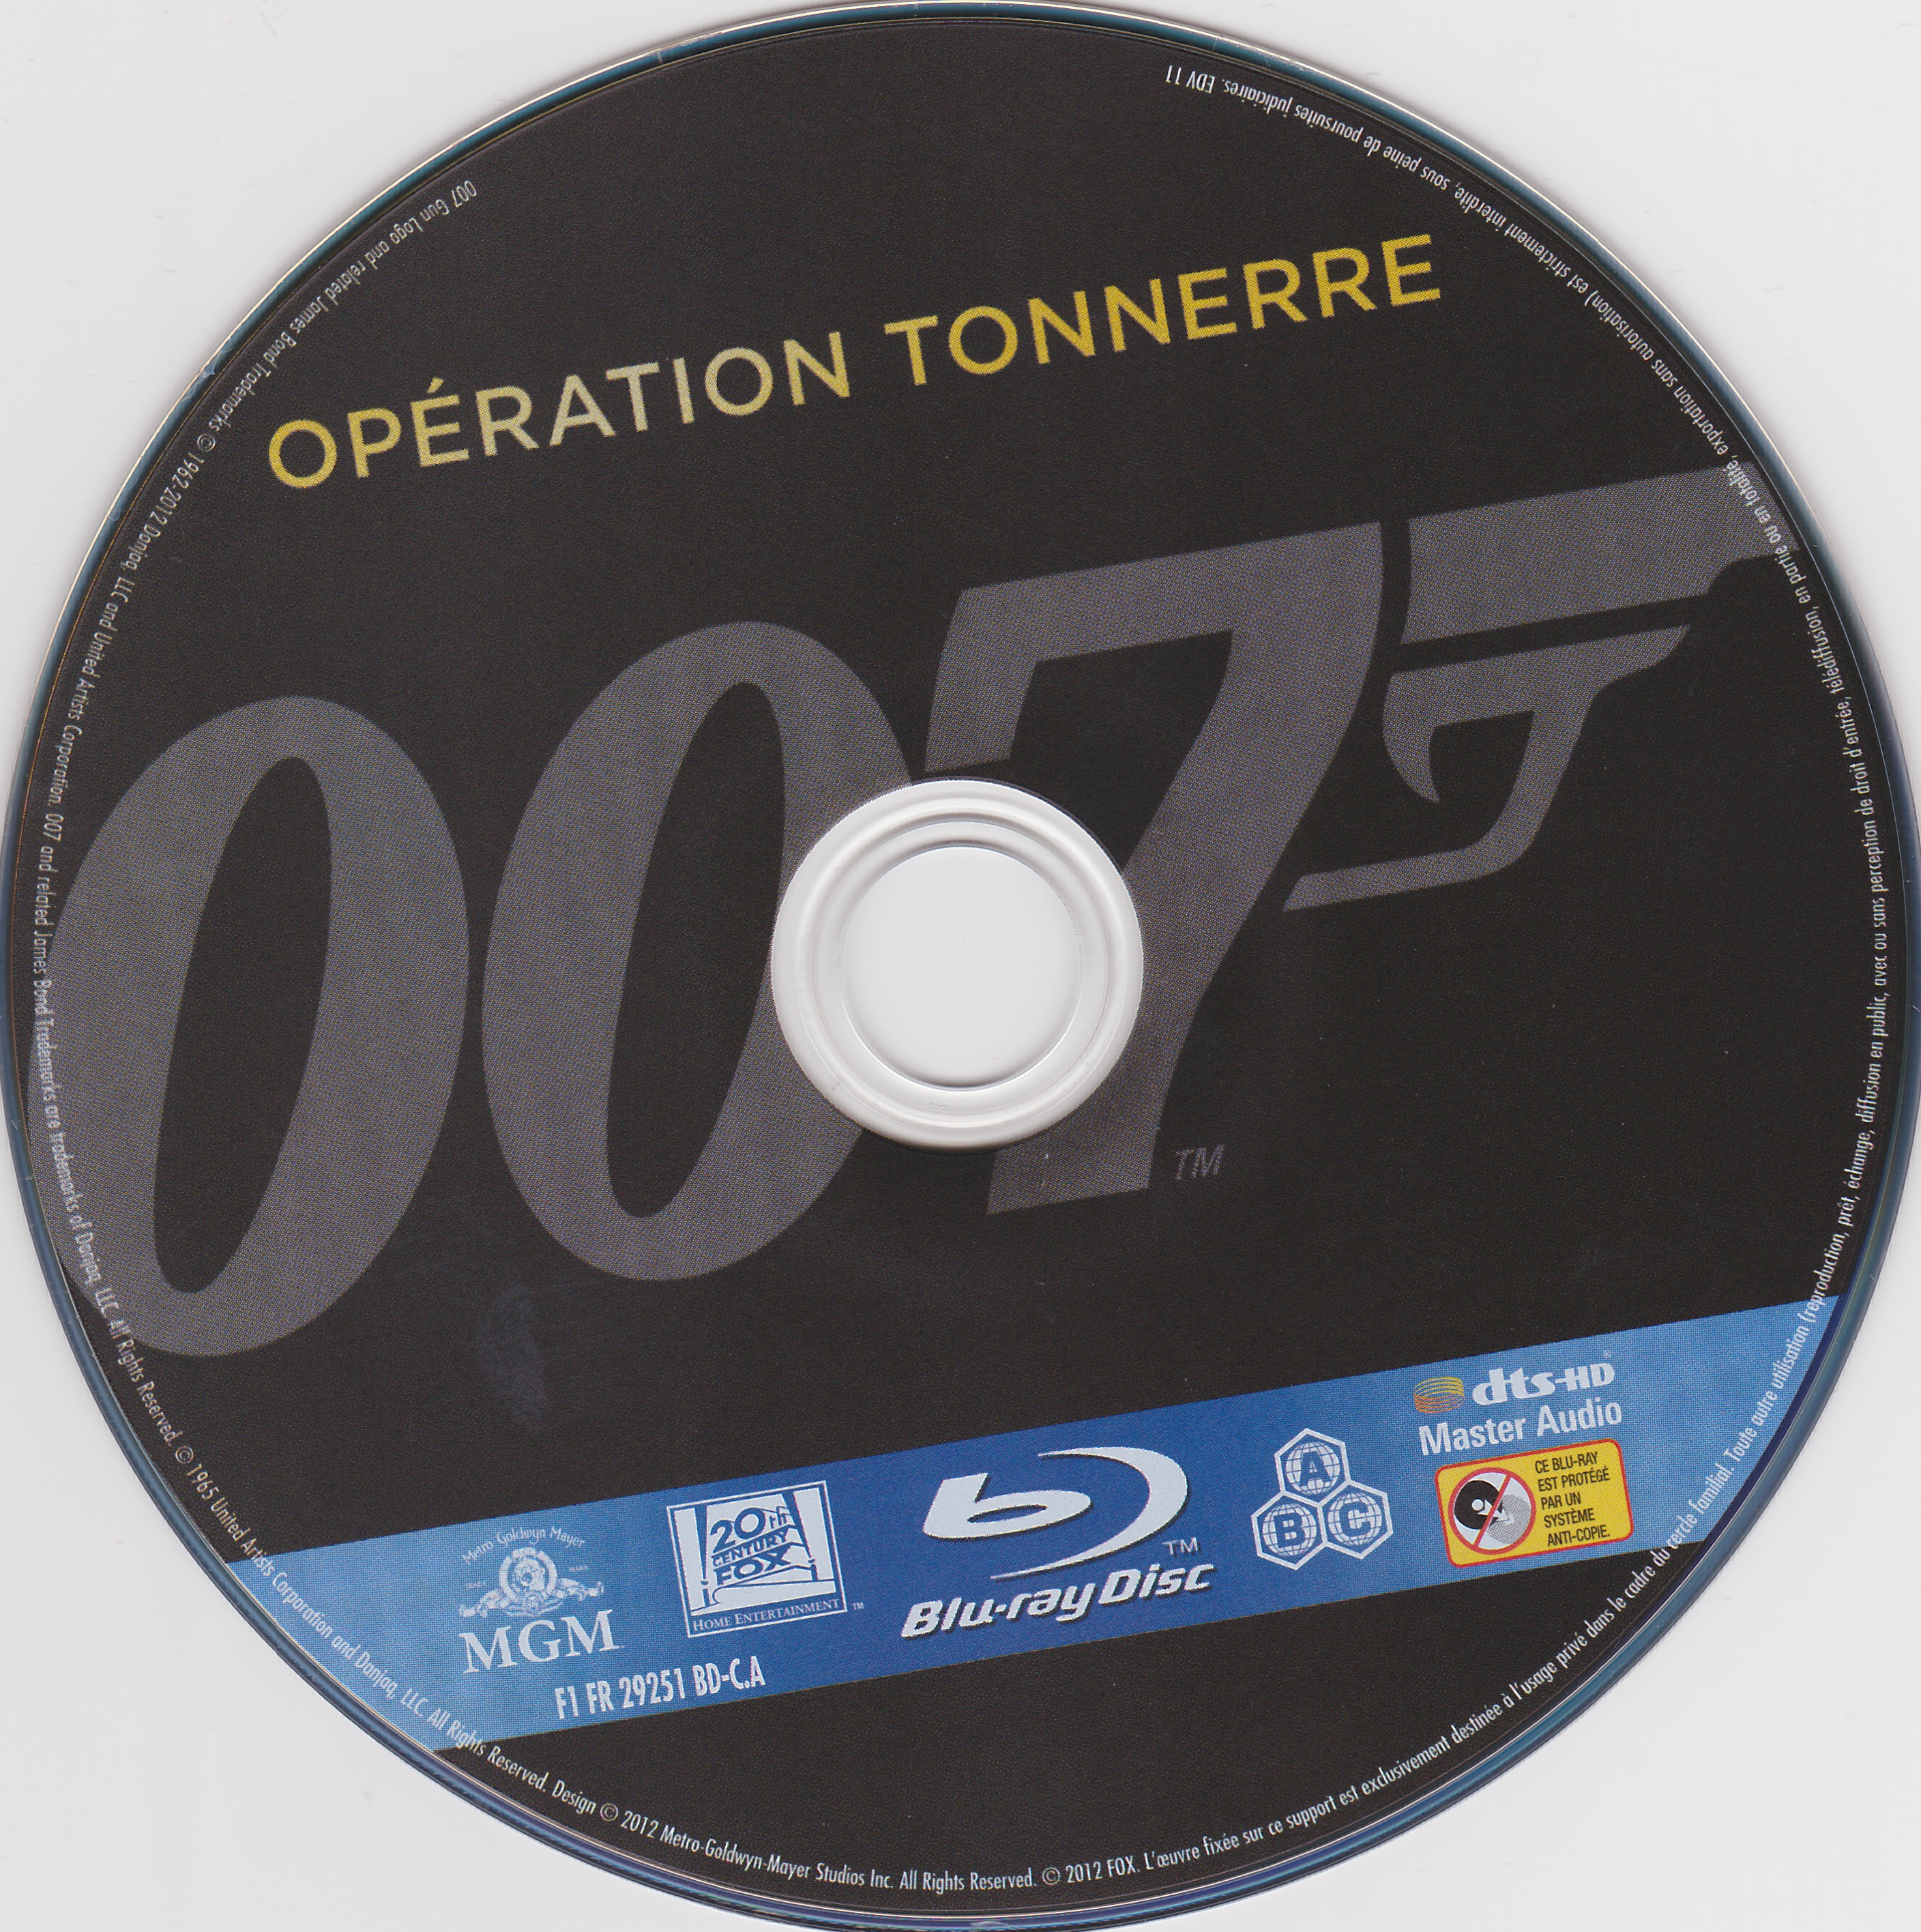 James Bond 007 Opration tonnerre (BLU-RAY)